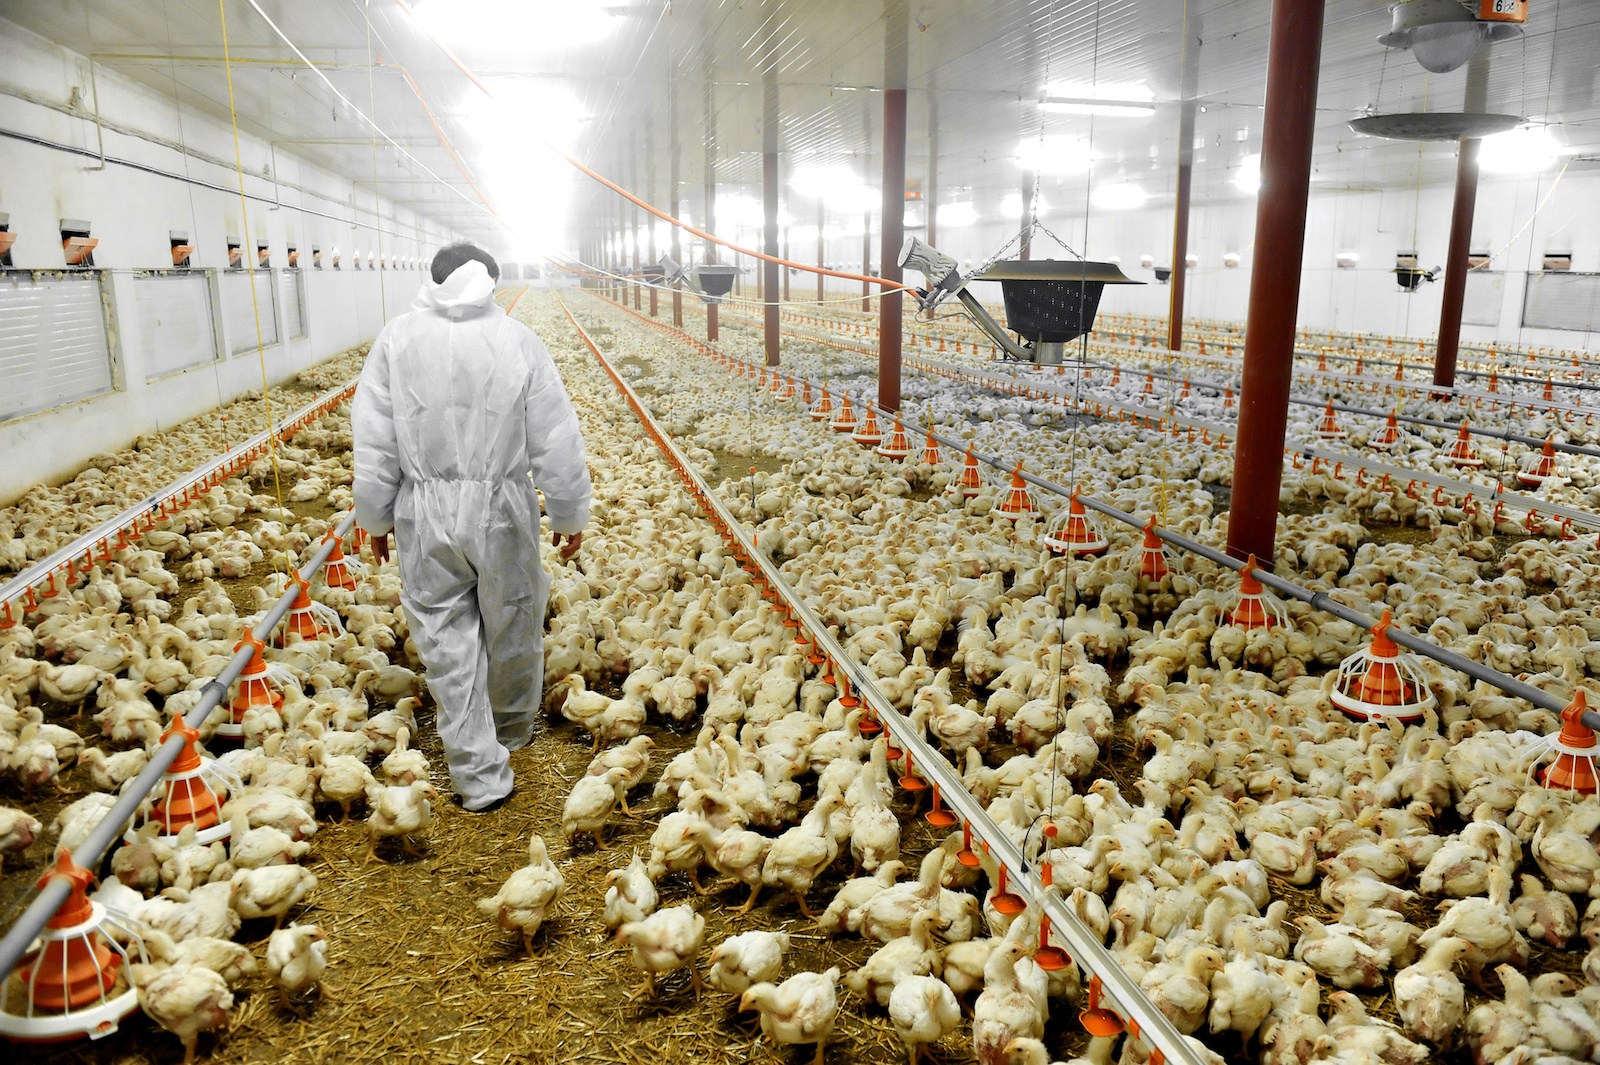 Poultry Farm